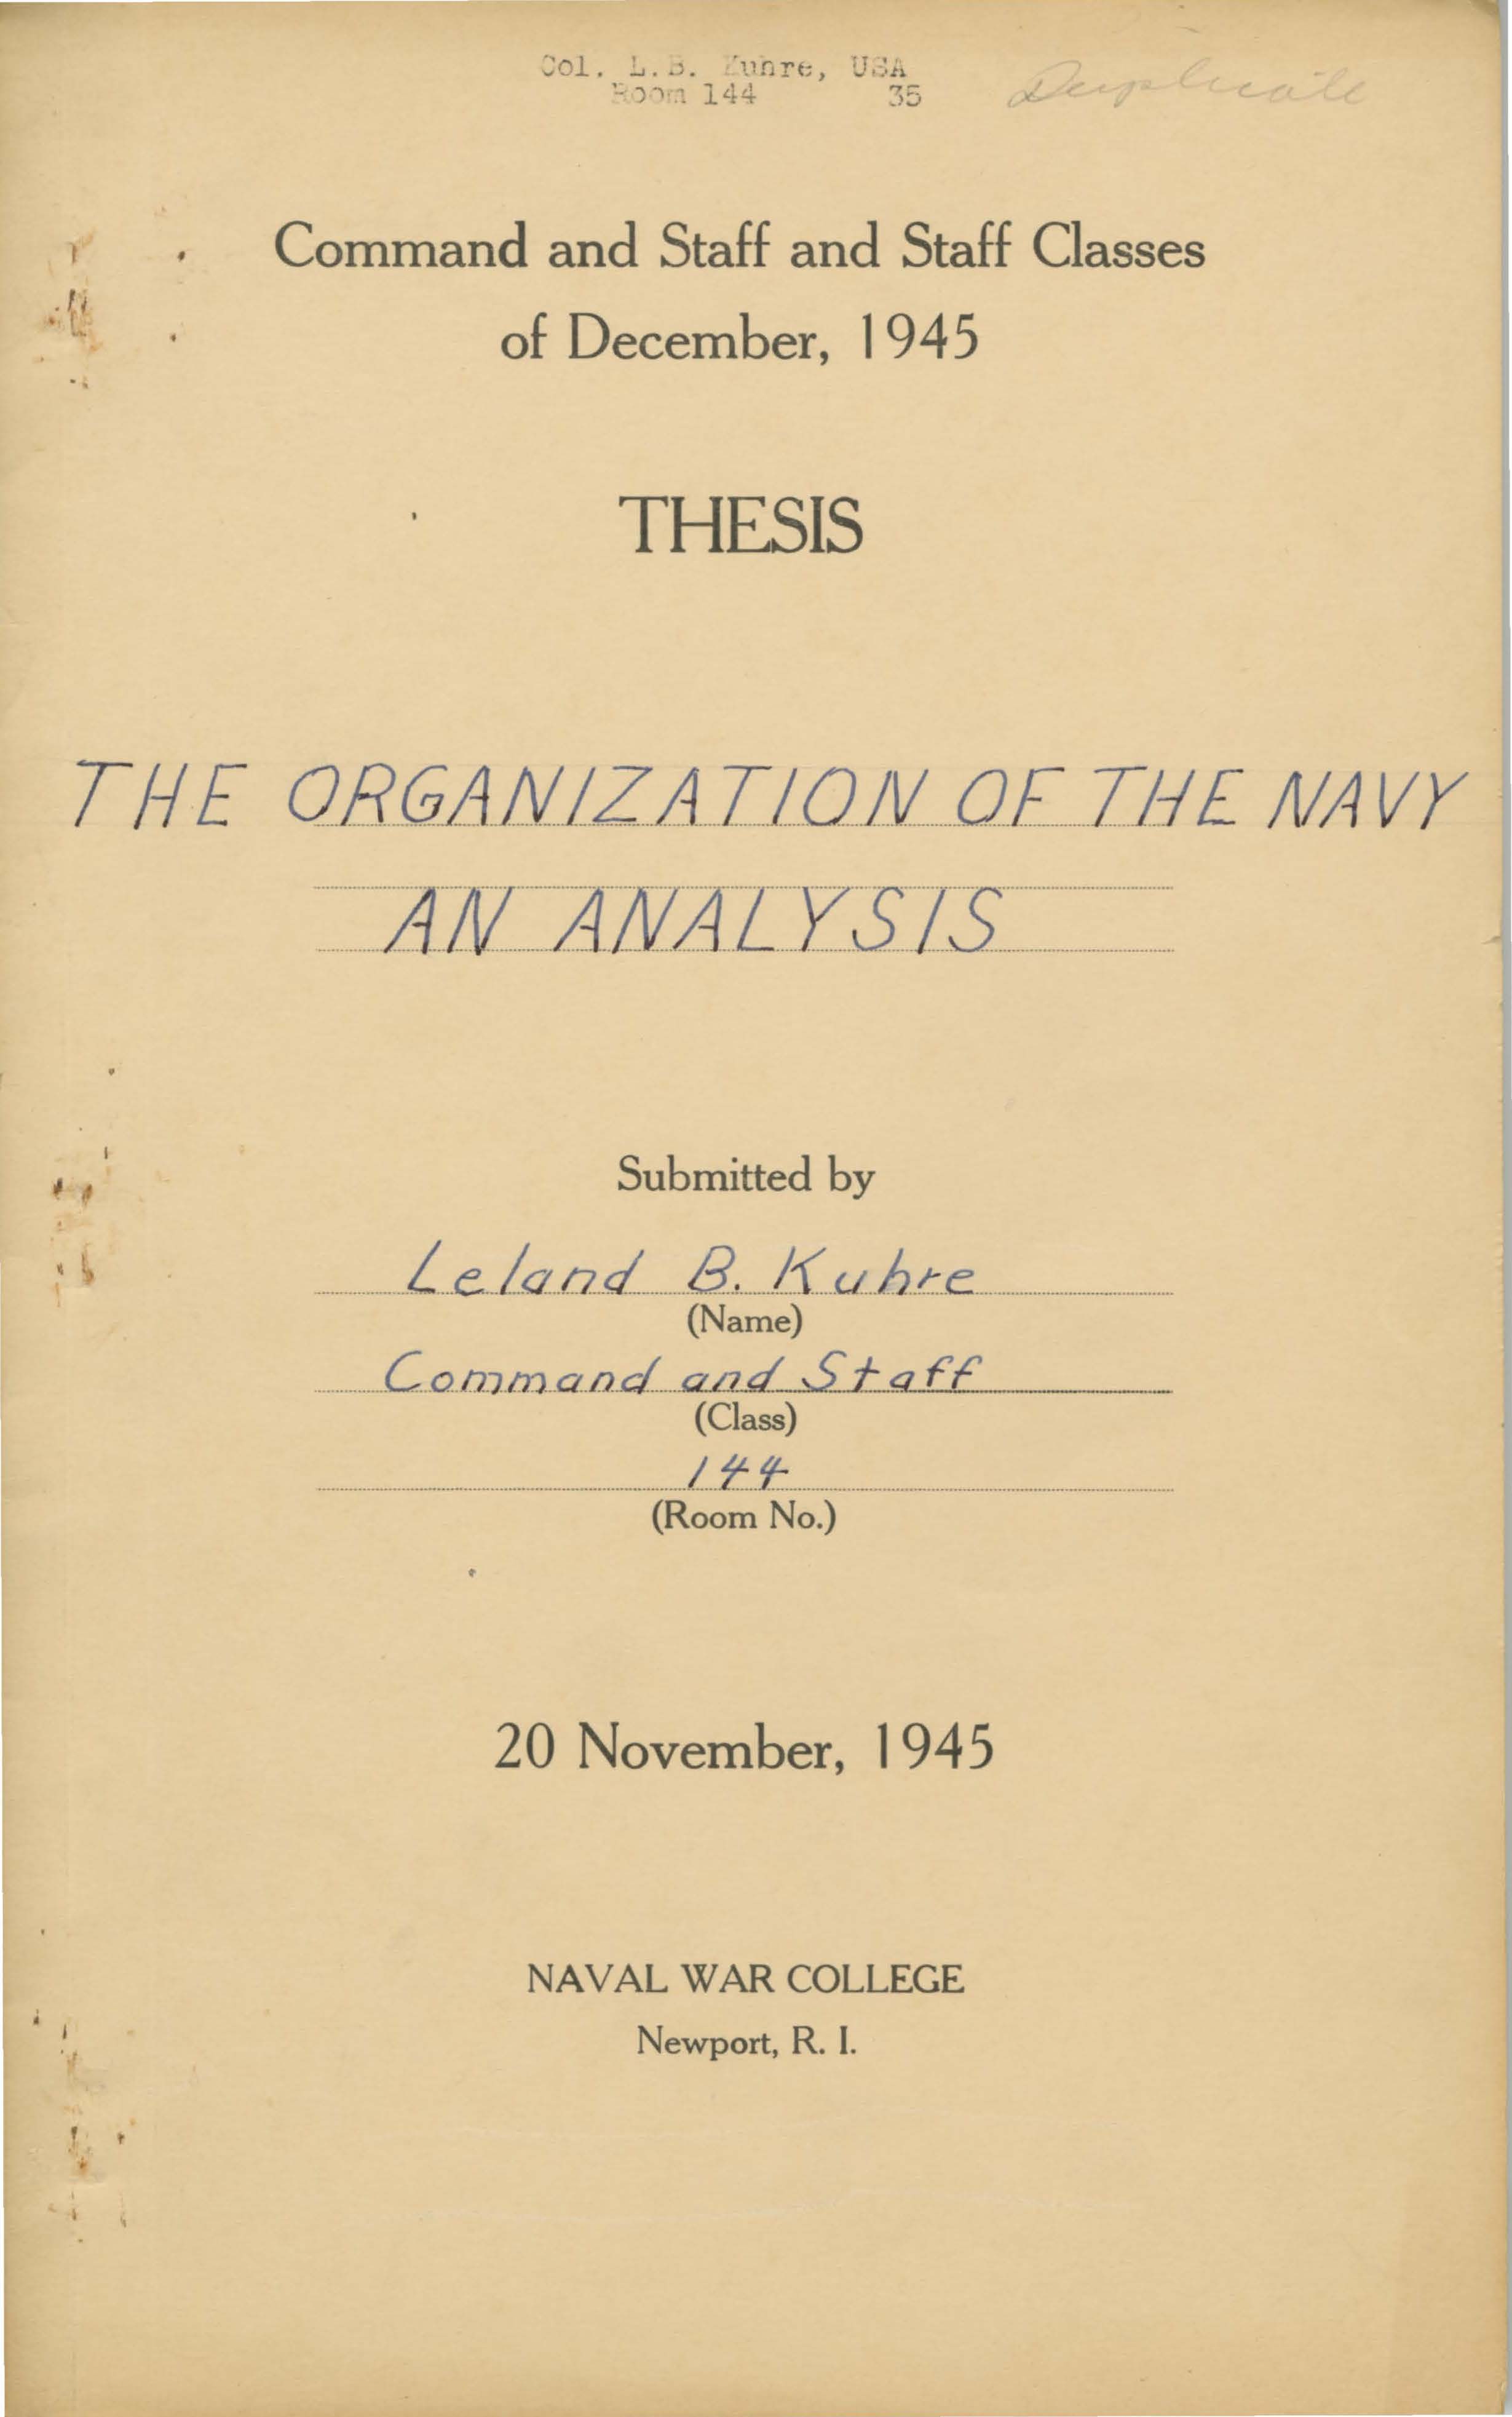 Organization of the Navy an Analysis, Leland B. Kuhre